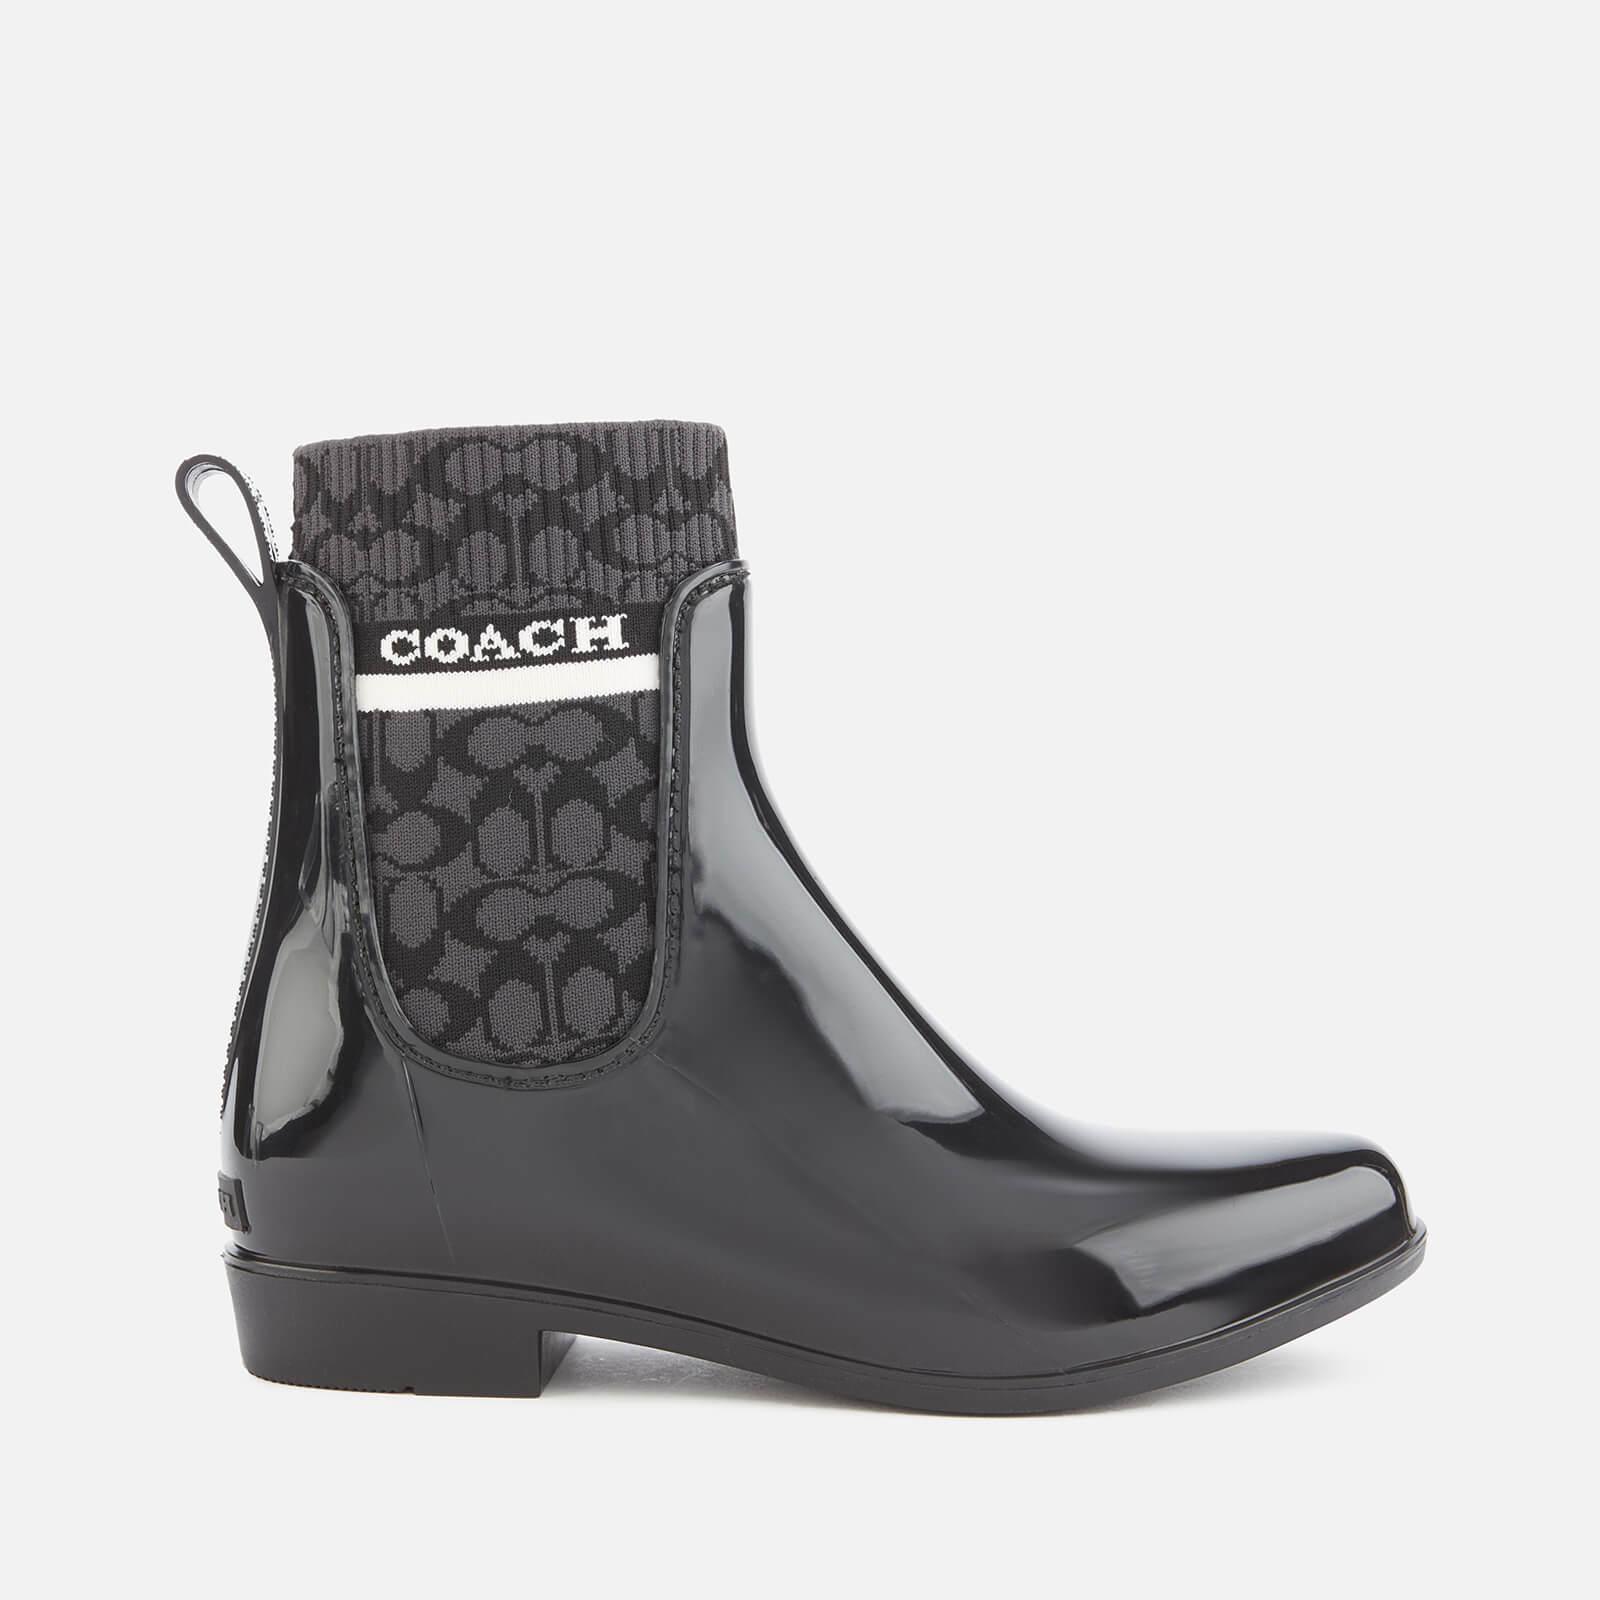 COACH Rubber Rivington Signature Knit Rain Boots in Black - Lyst